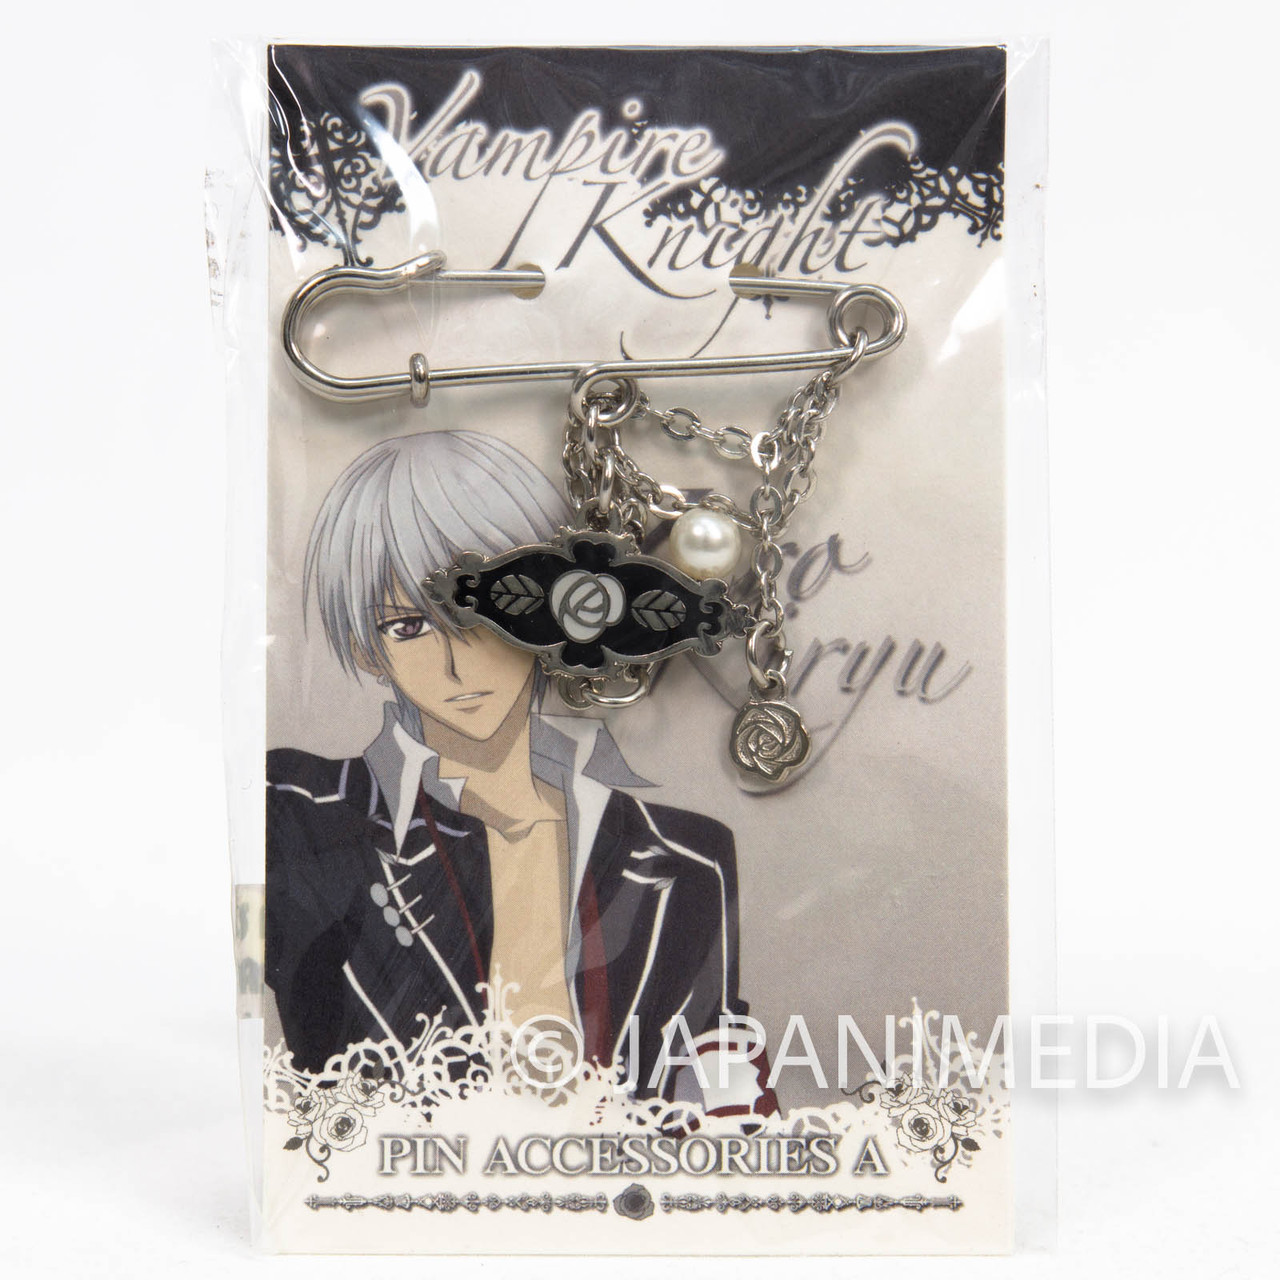 Vampire Knight Zero Kiryu Pin Accessories [A] JAPAN ANIME MANGA -  Japanimedia Store